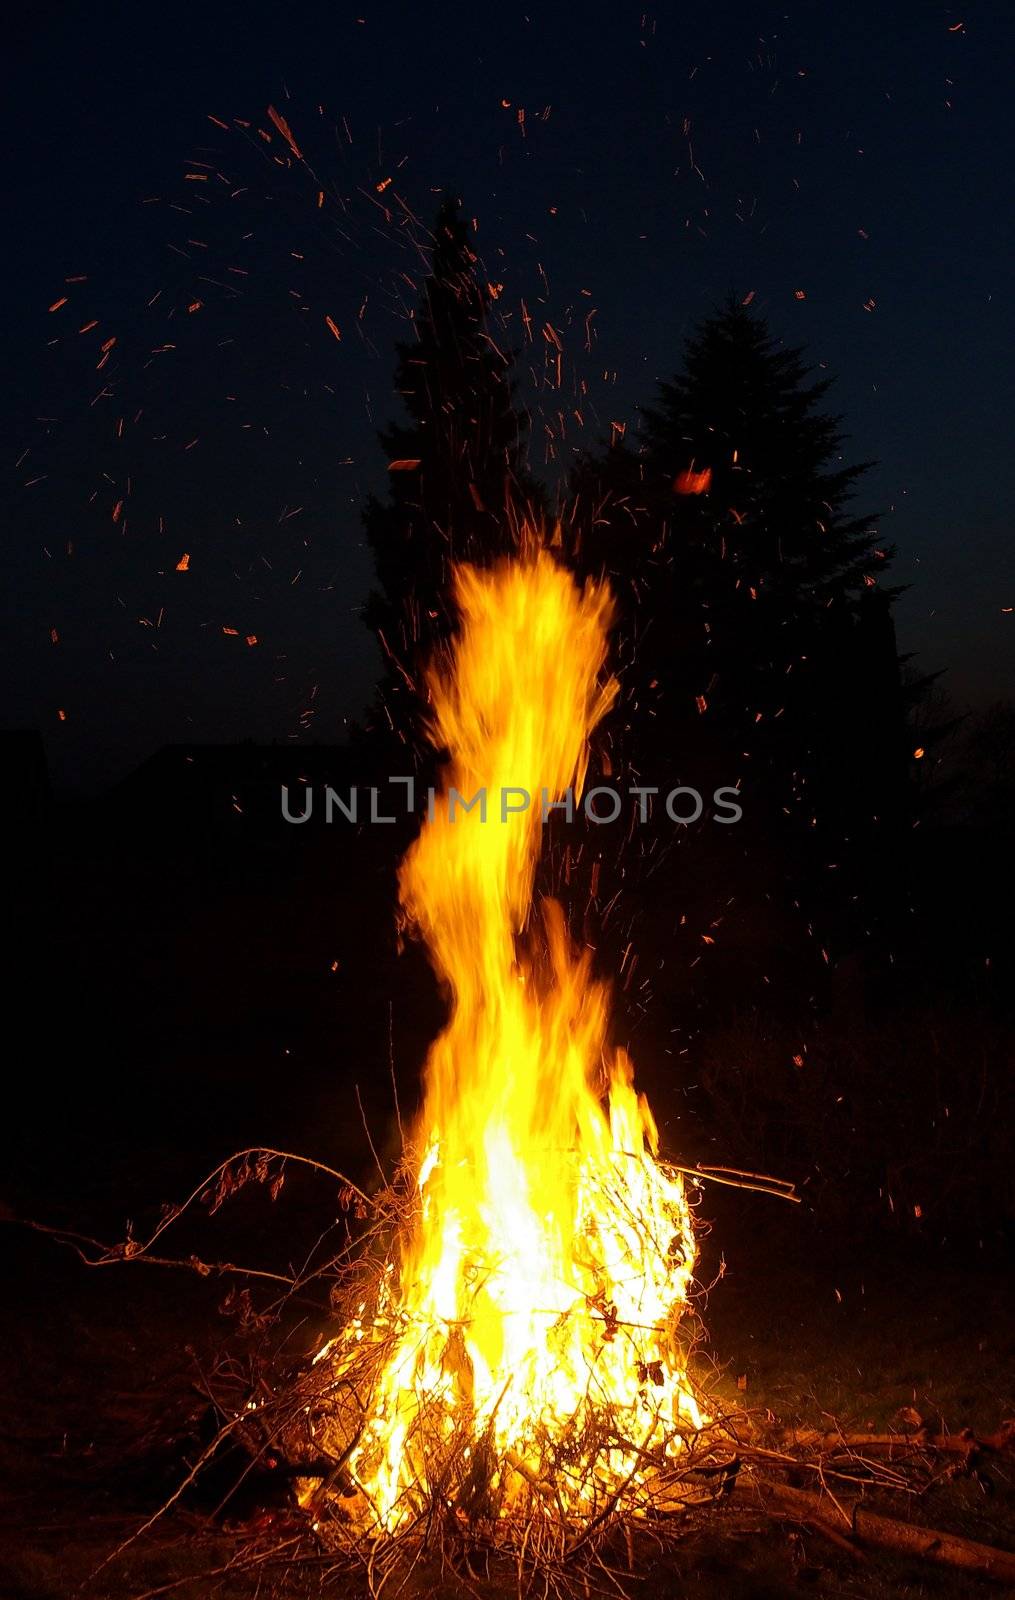 Campfire by FotoFrank